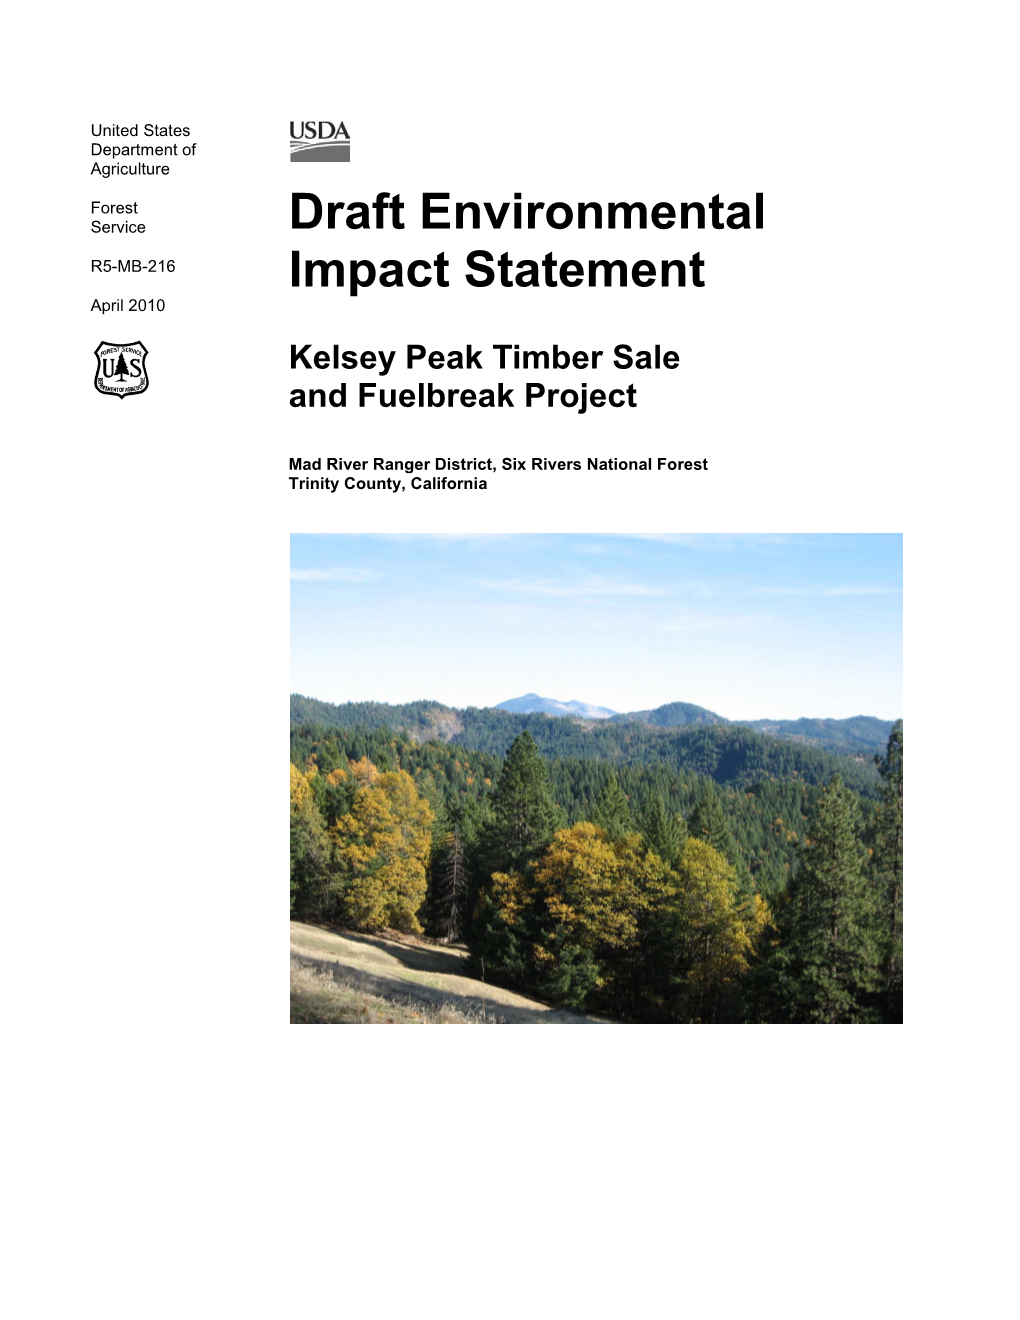 Kelsey Peak Timber Sale and Fuelbreak Project: Draft Environmental Impact Statement